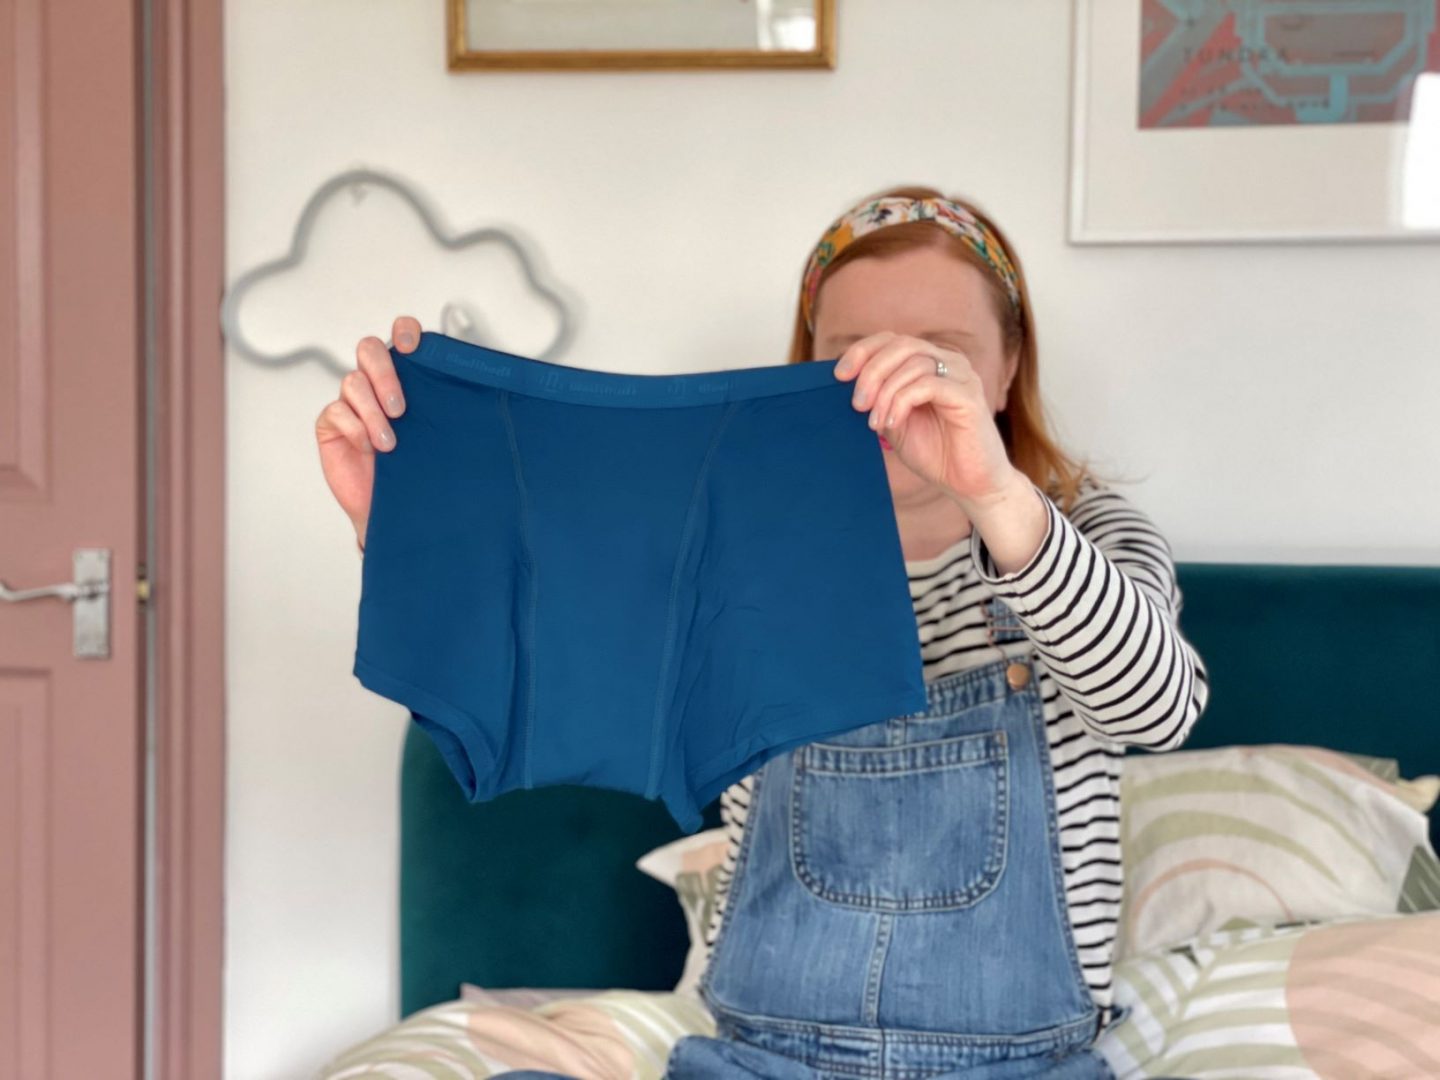 Modi bodi period pants - reusable period underwear. Do they leak?